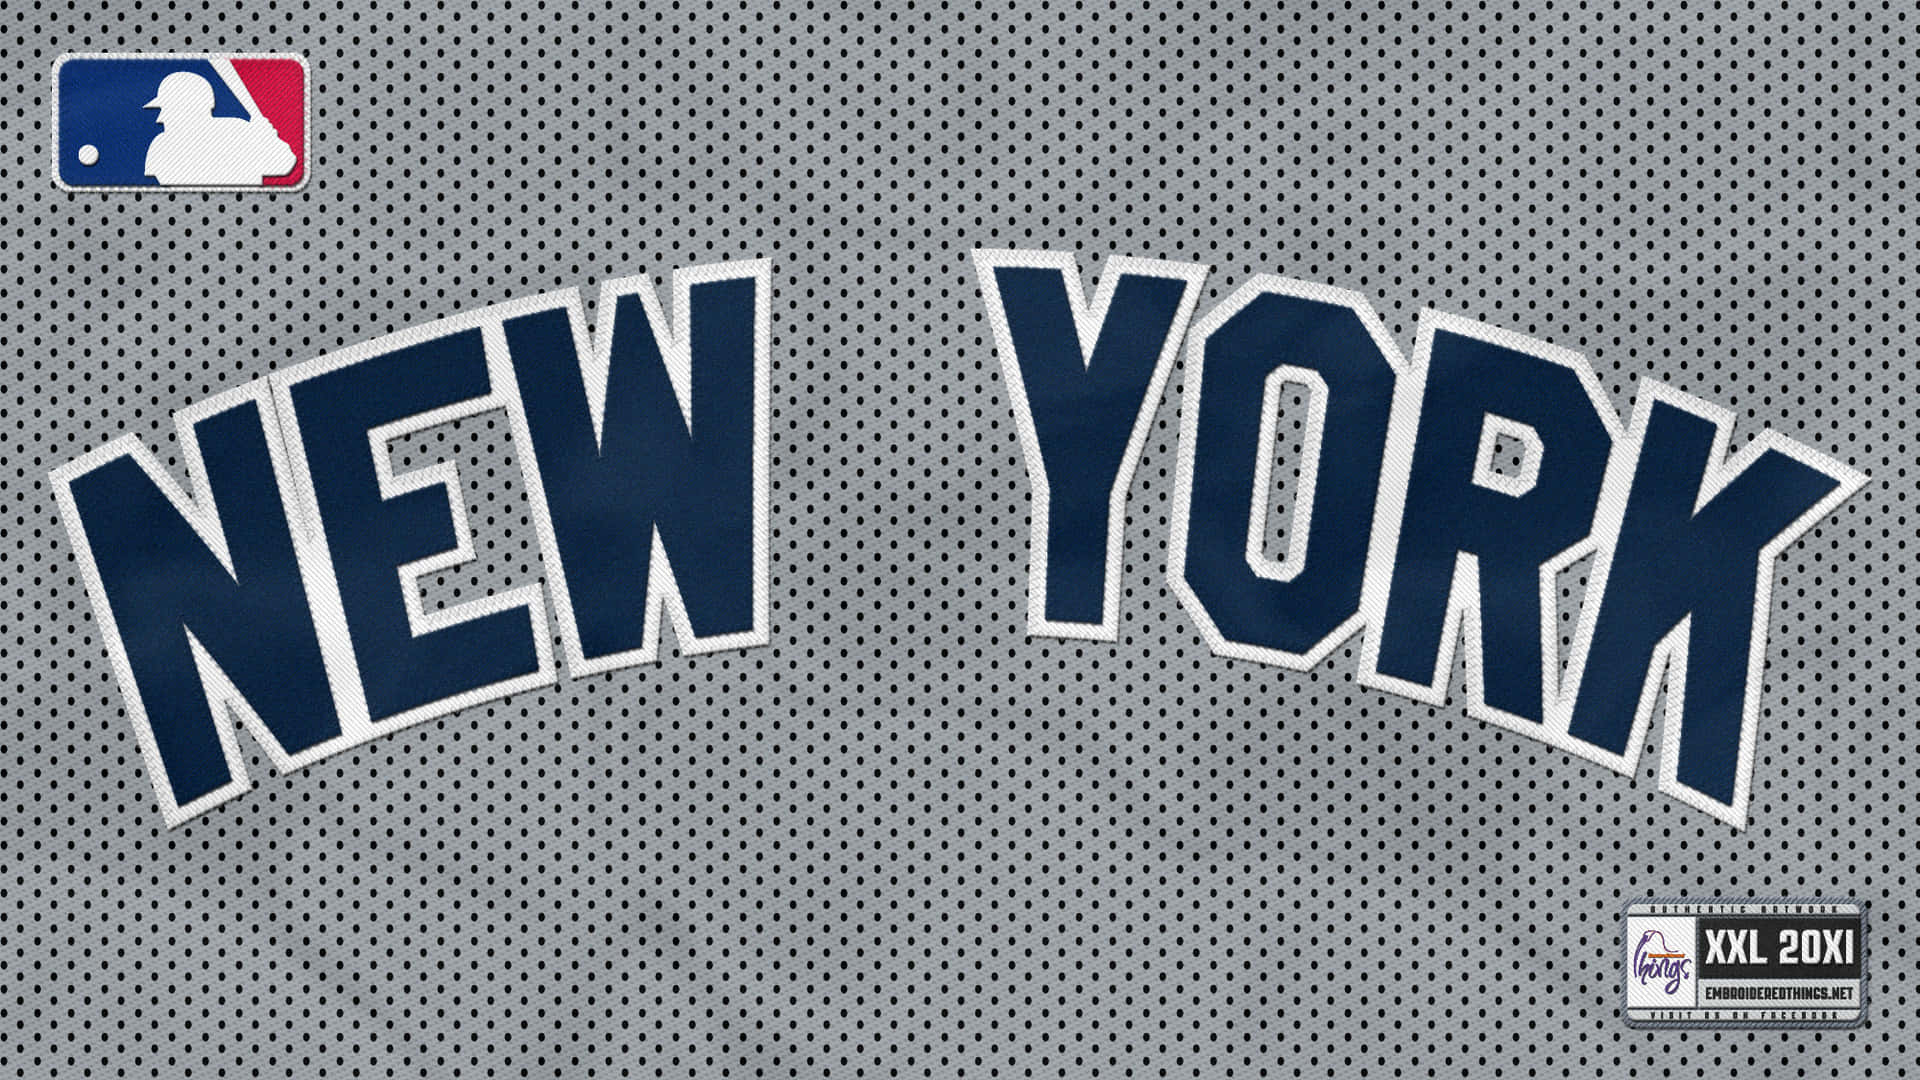 New York Yankees Logo On A Mesh Background Wallpaper